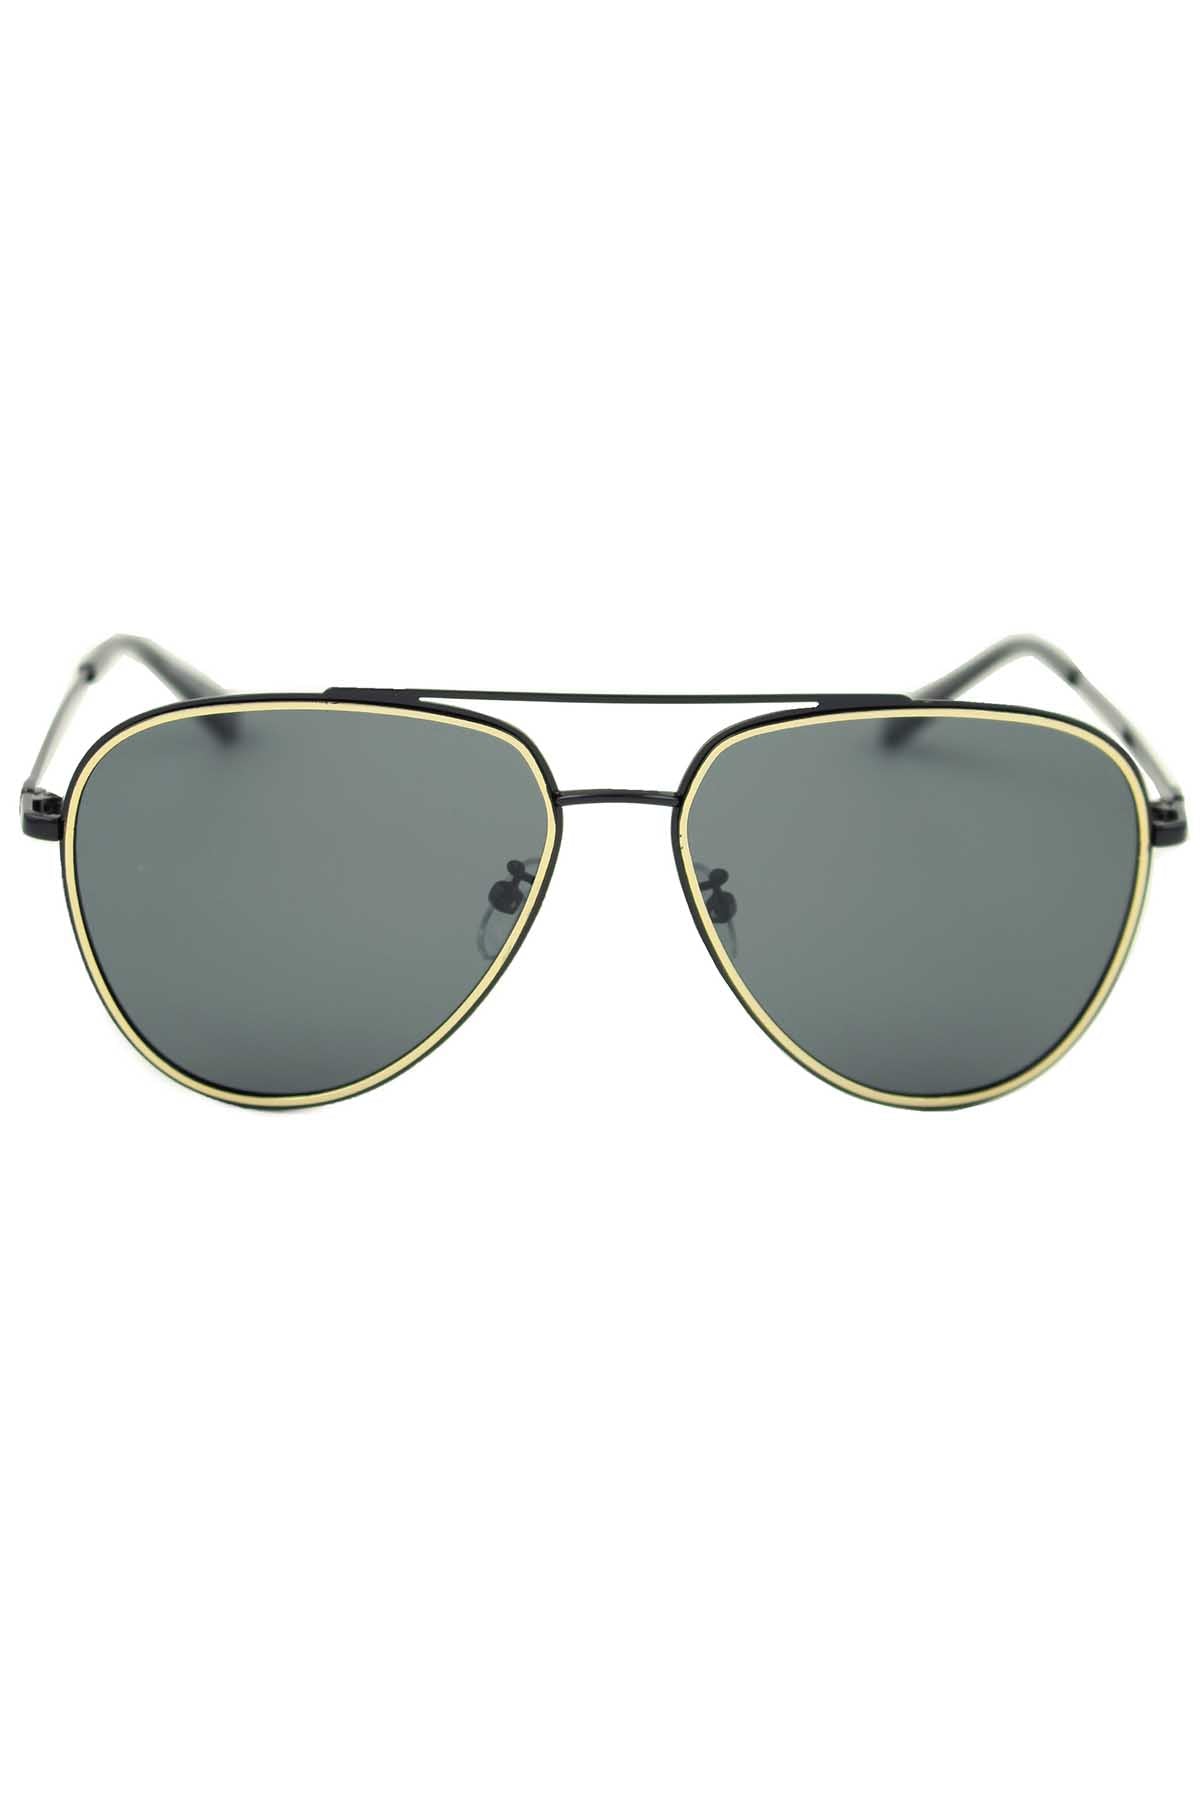 DIBI Black/Gold Barcelona Sunglasses